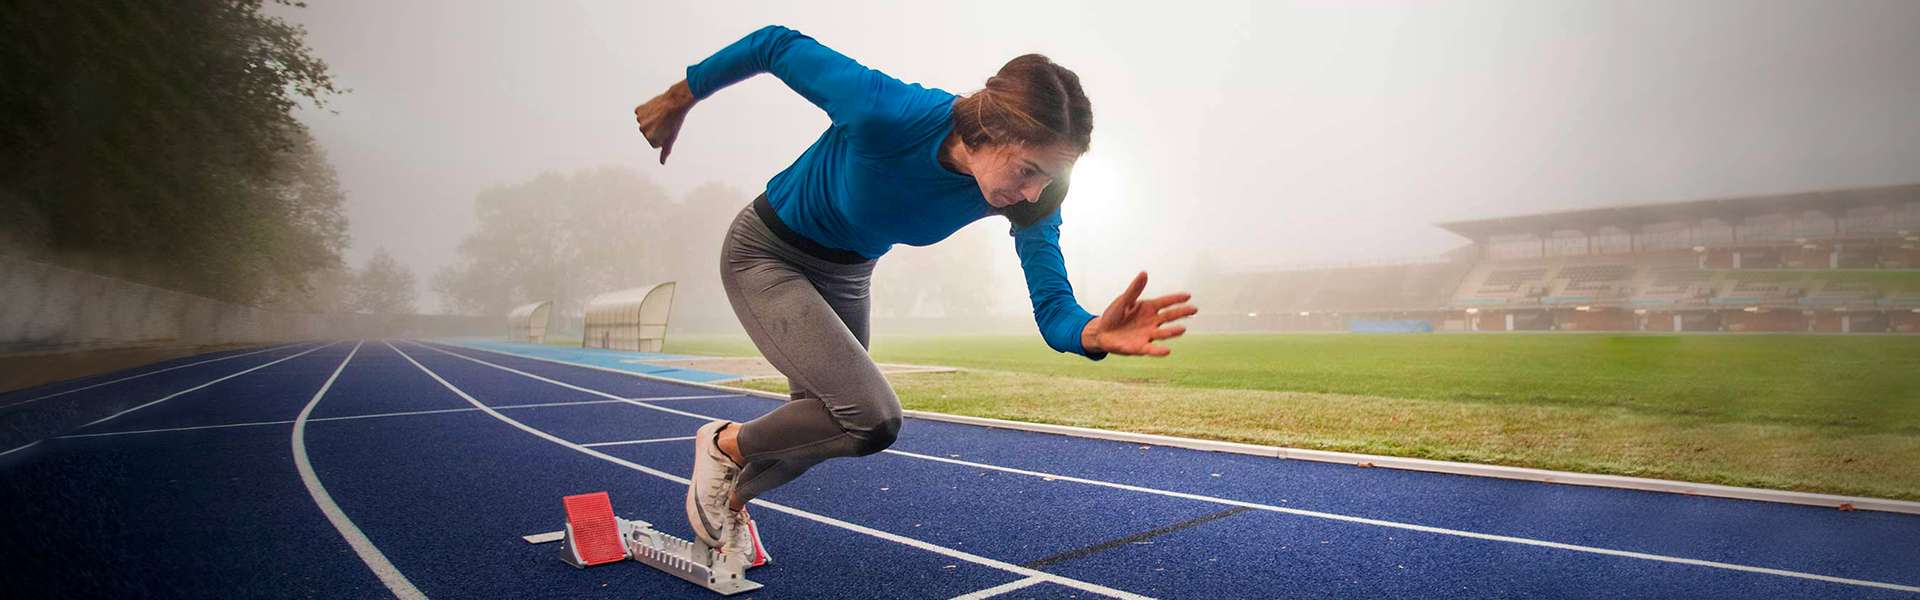 Athlete nutrition: focus on the sprinter